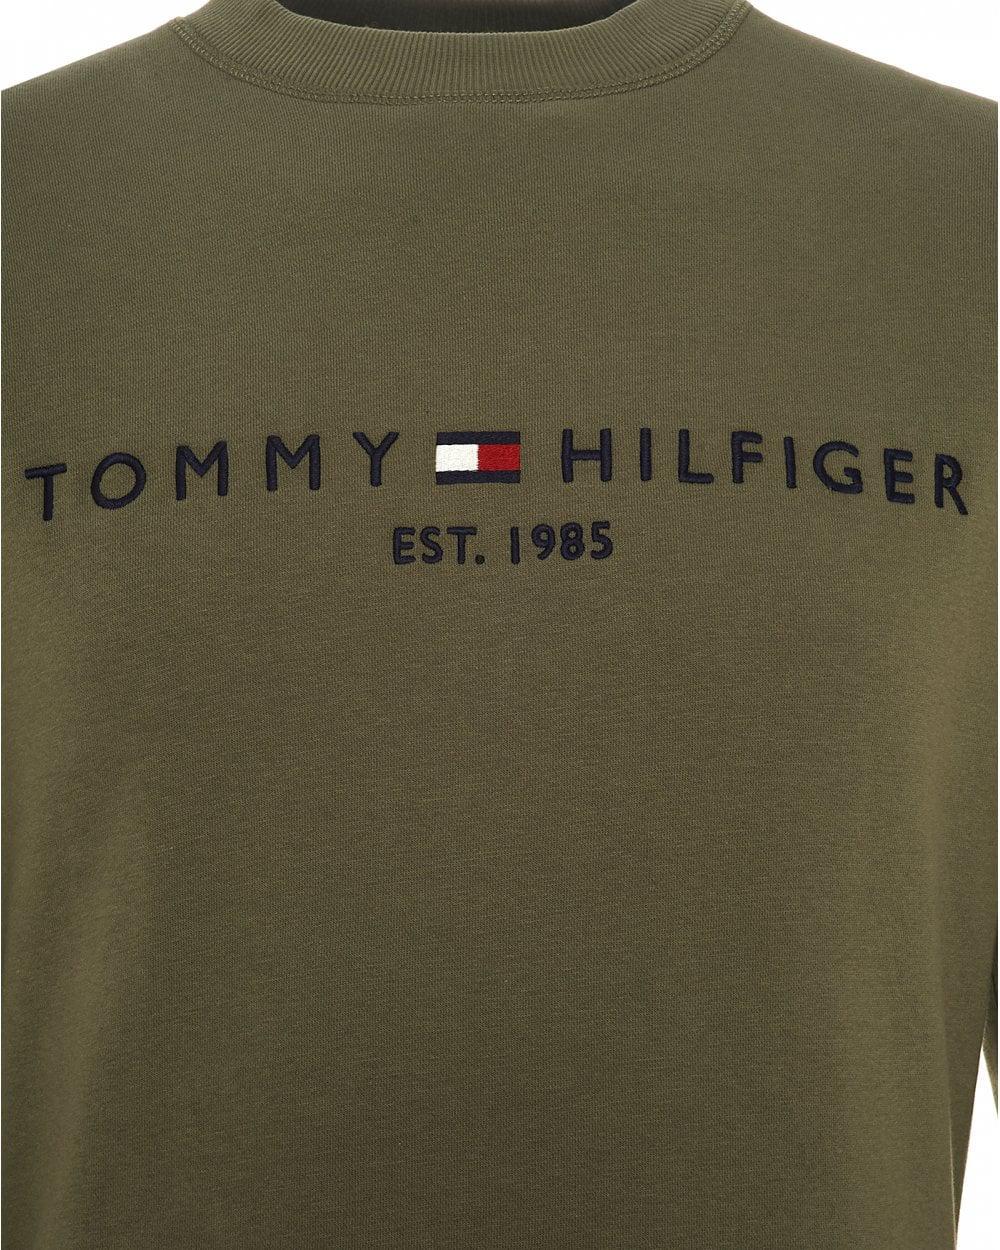 Tommy Hilfiger Denim Est. 1985 Logo Sweatshirt, Dusty Olive Sweat in ...